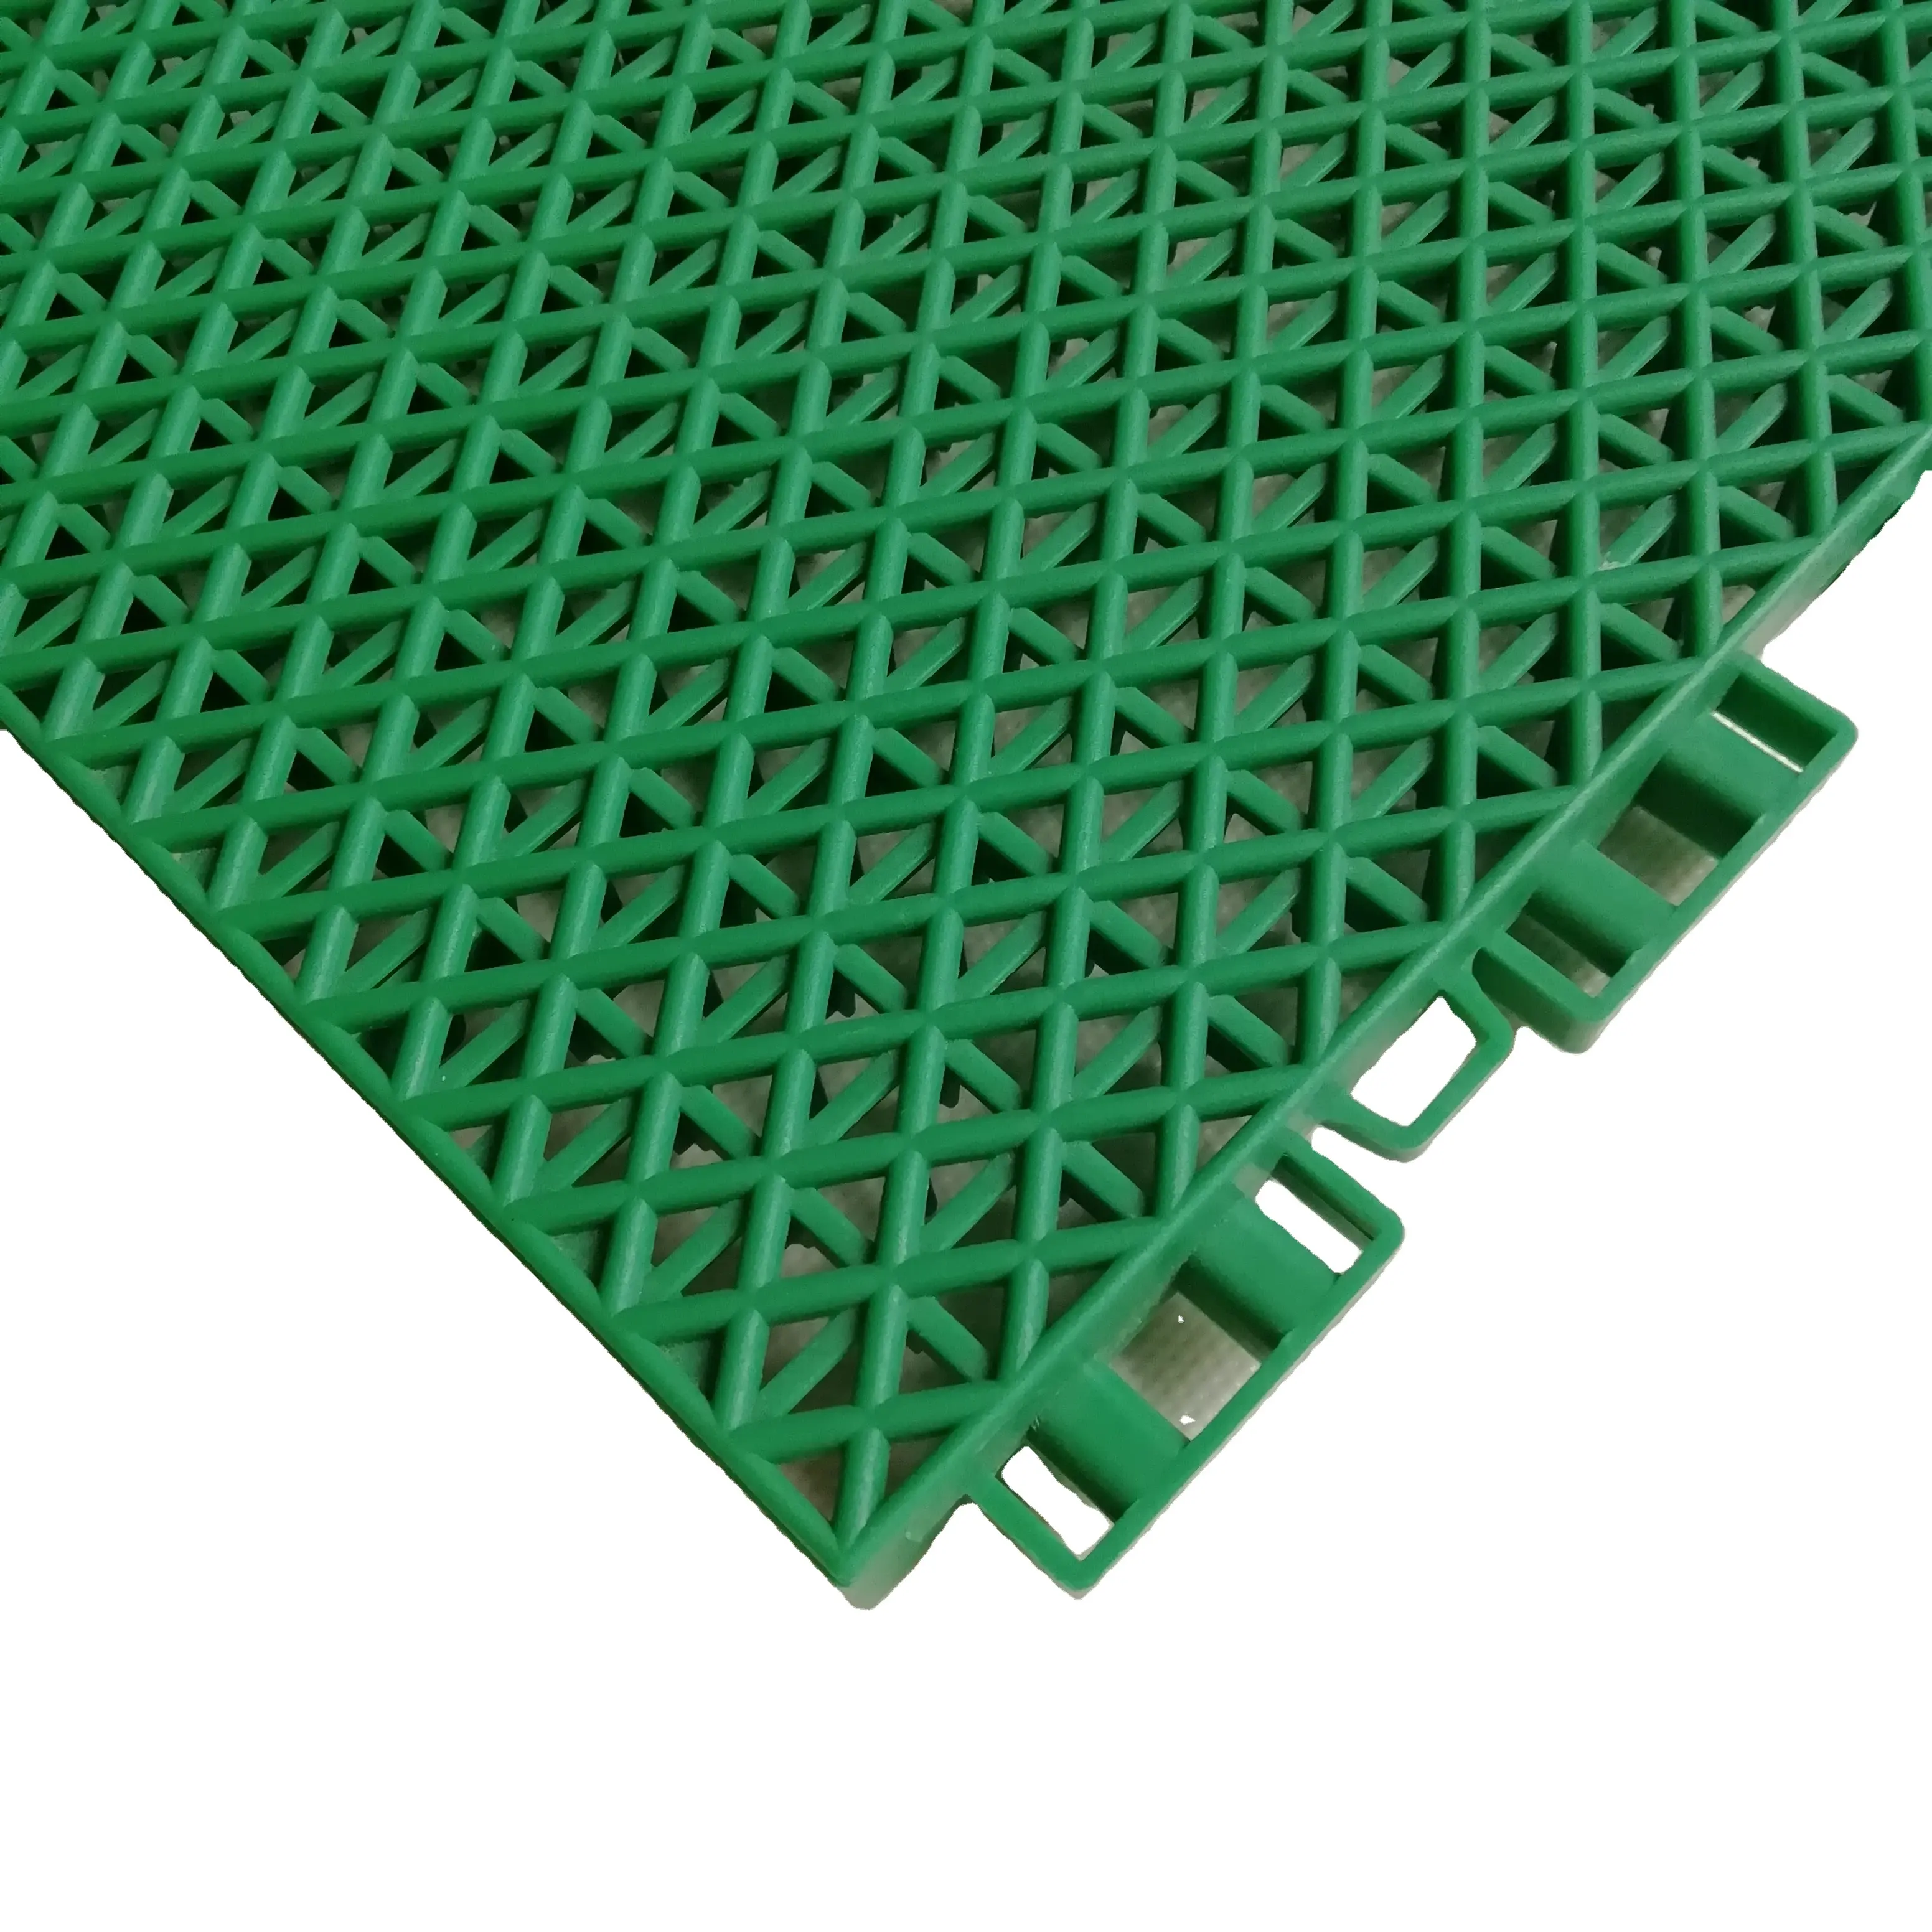 Outdoor PP portable basketball sport court material plastic tiles temporary basketball flooring